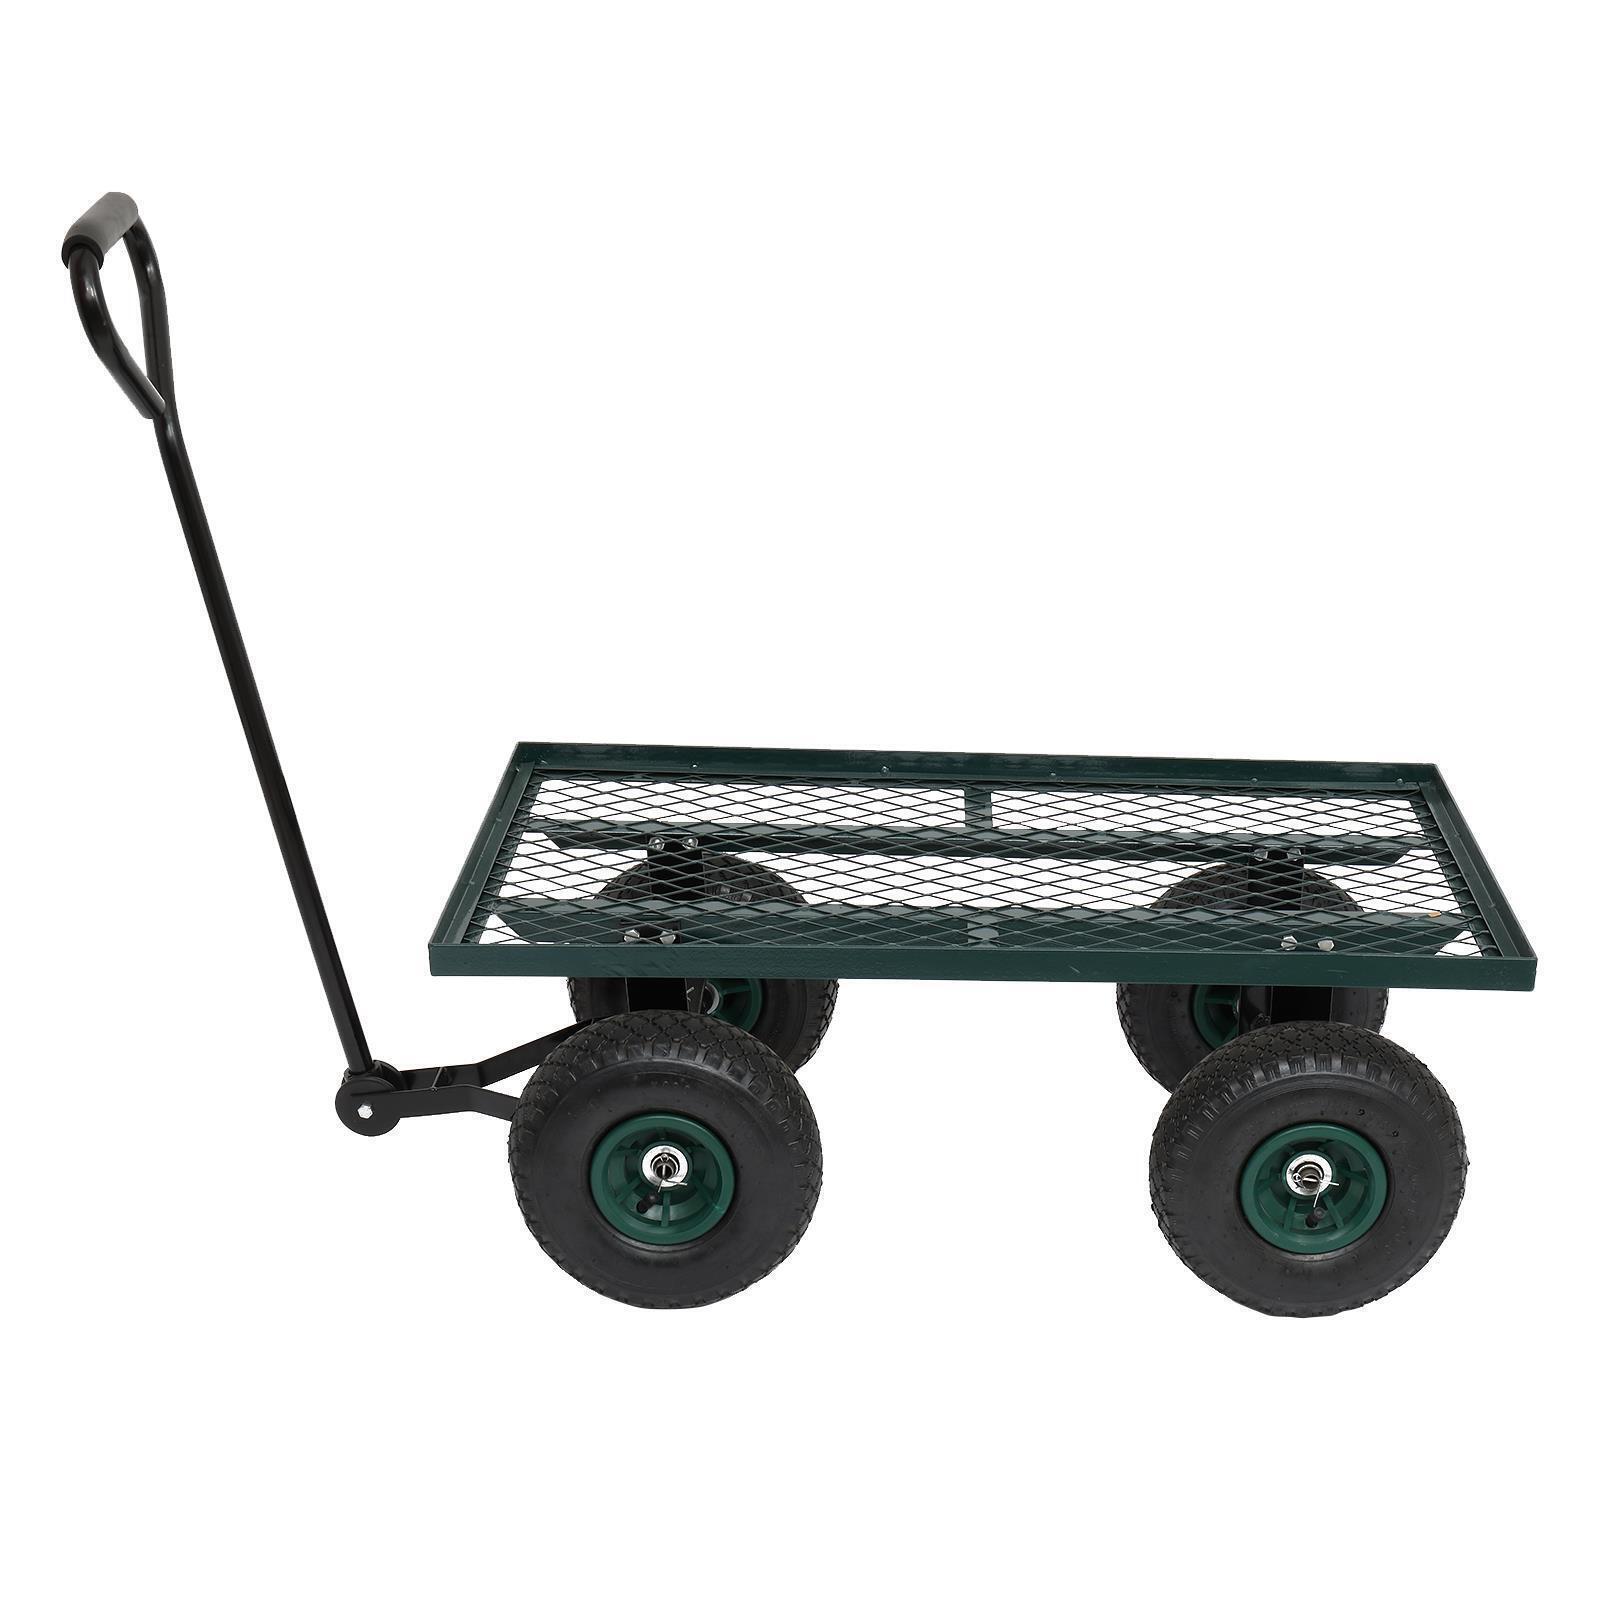 thinkstar Garden Carts Yard Dump Wagon Wheel Cart Hand Tools Cart Outdoor Heavy Duty